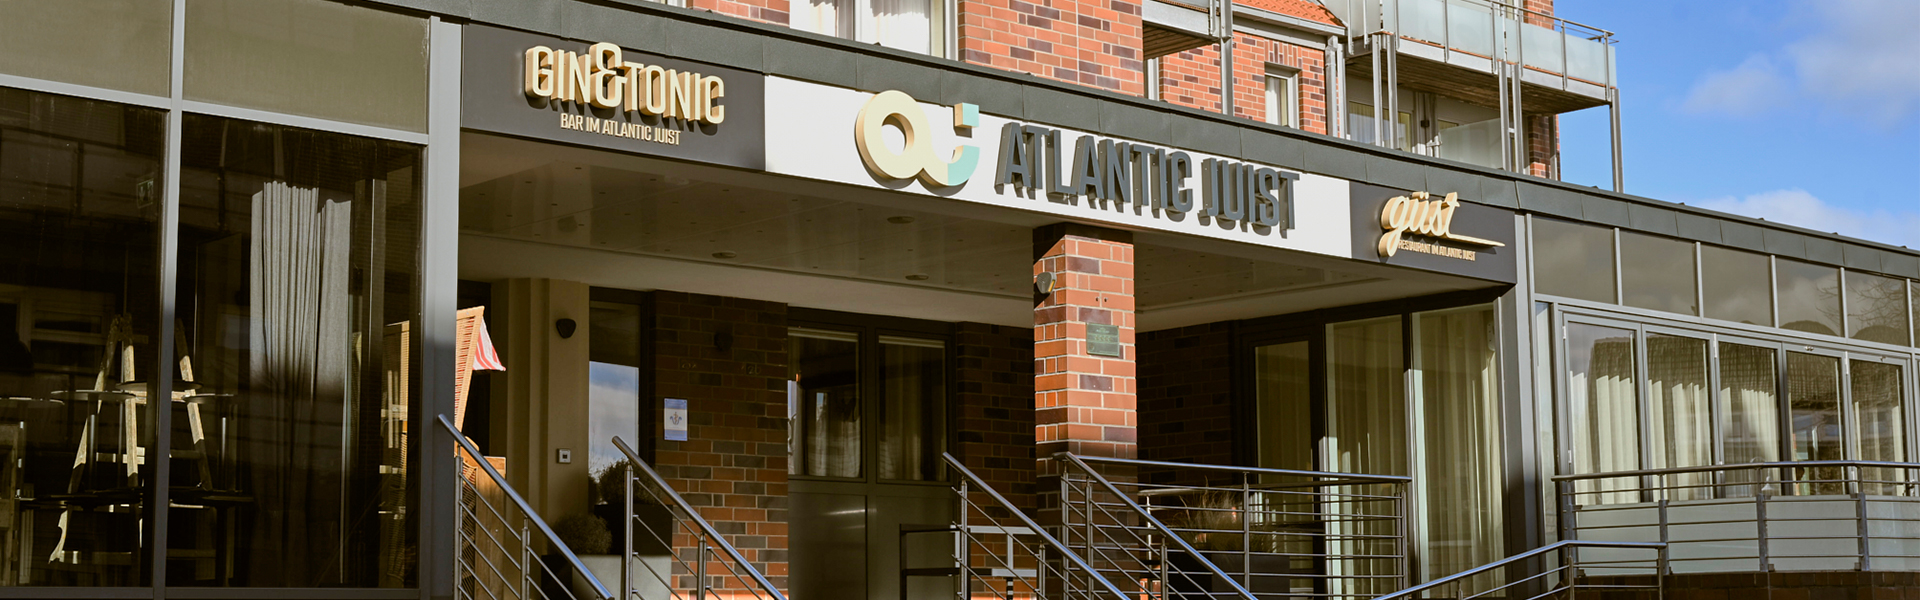 Hotel Atlantic Juist Eingang